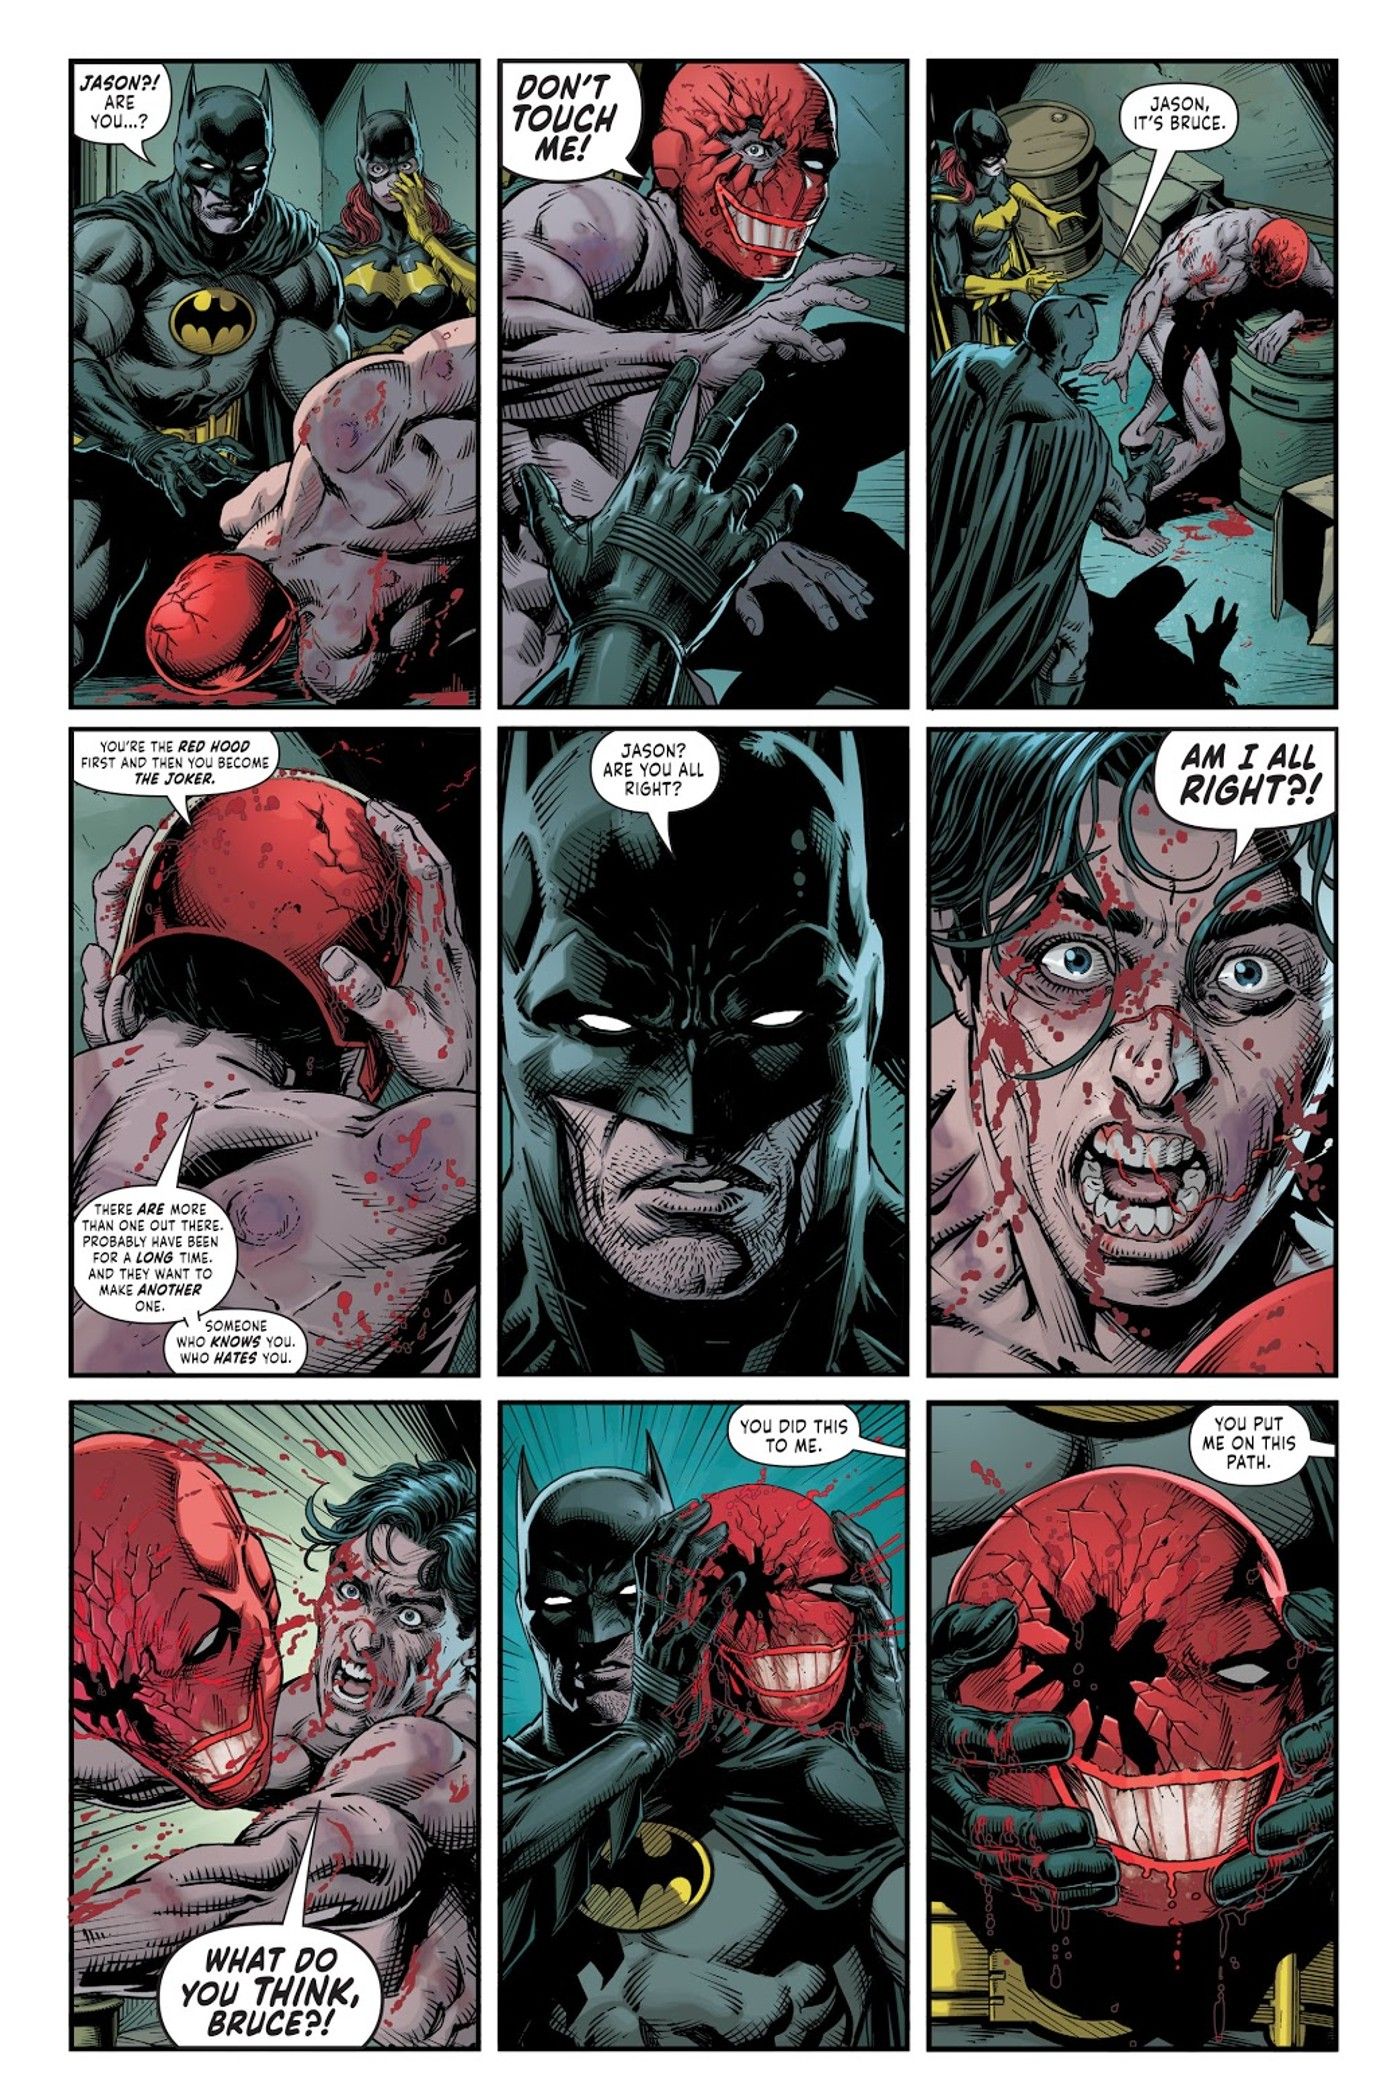 Joker Recreates Batgirl’s Killing Joke Trauma For Red Hood (And Wins)